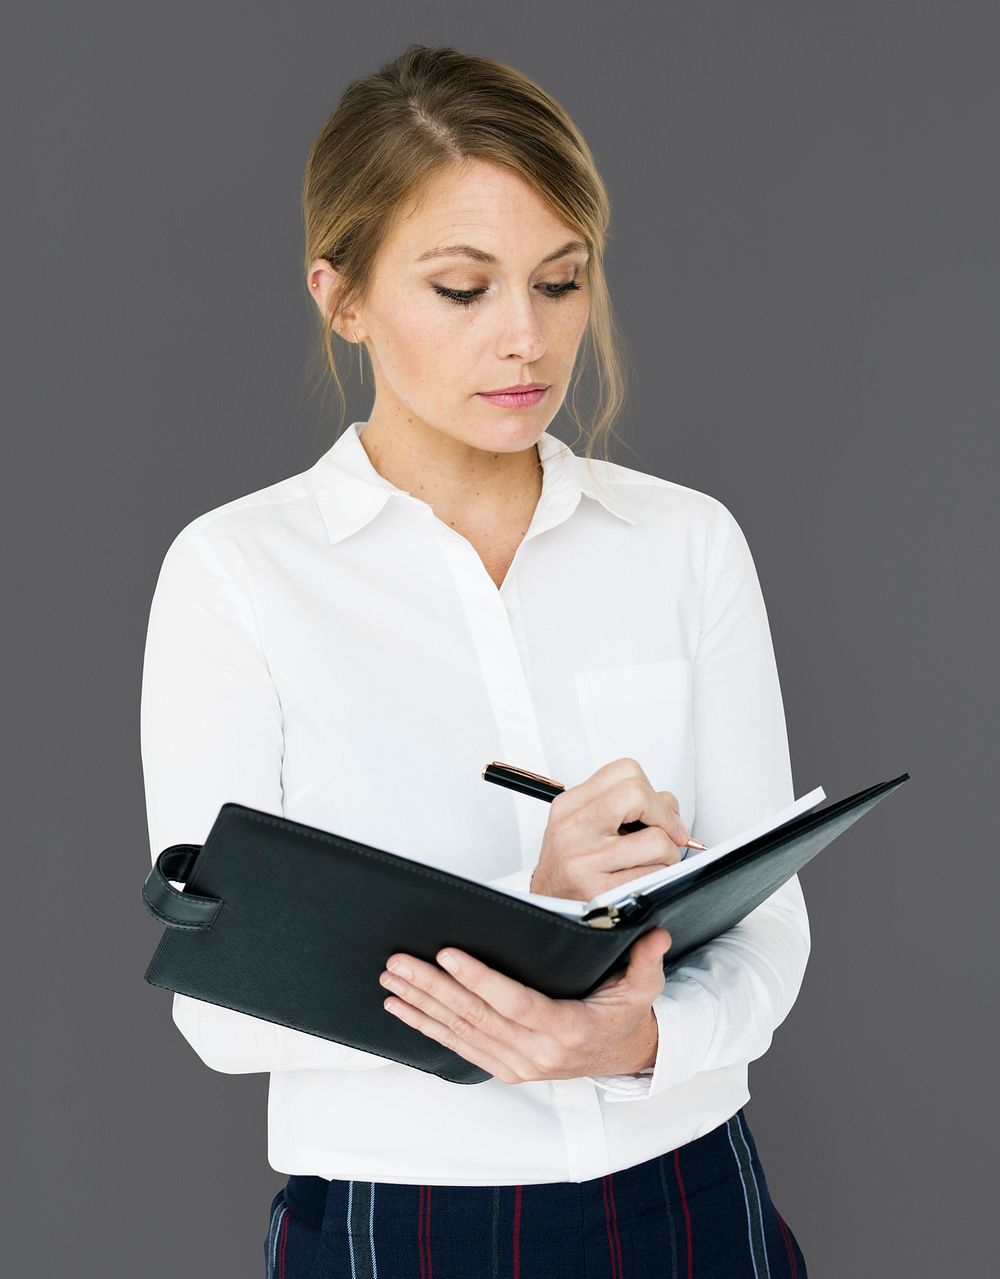 Businesswoman Document Working Portrait Concept